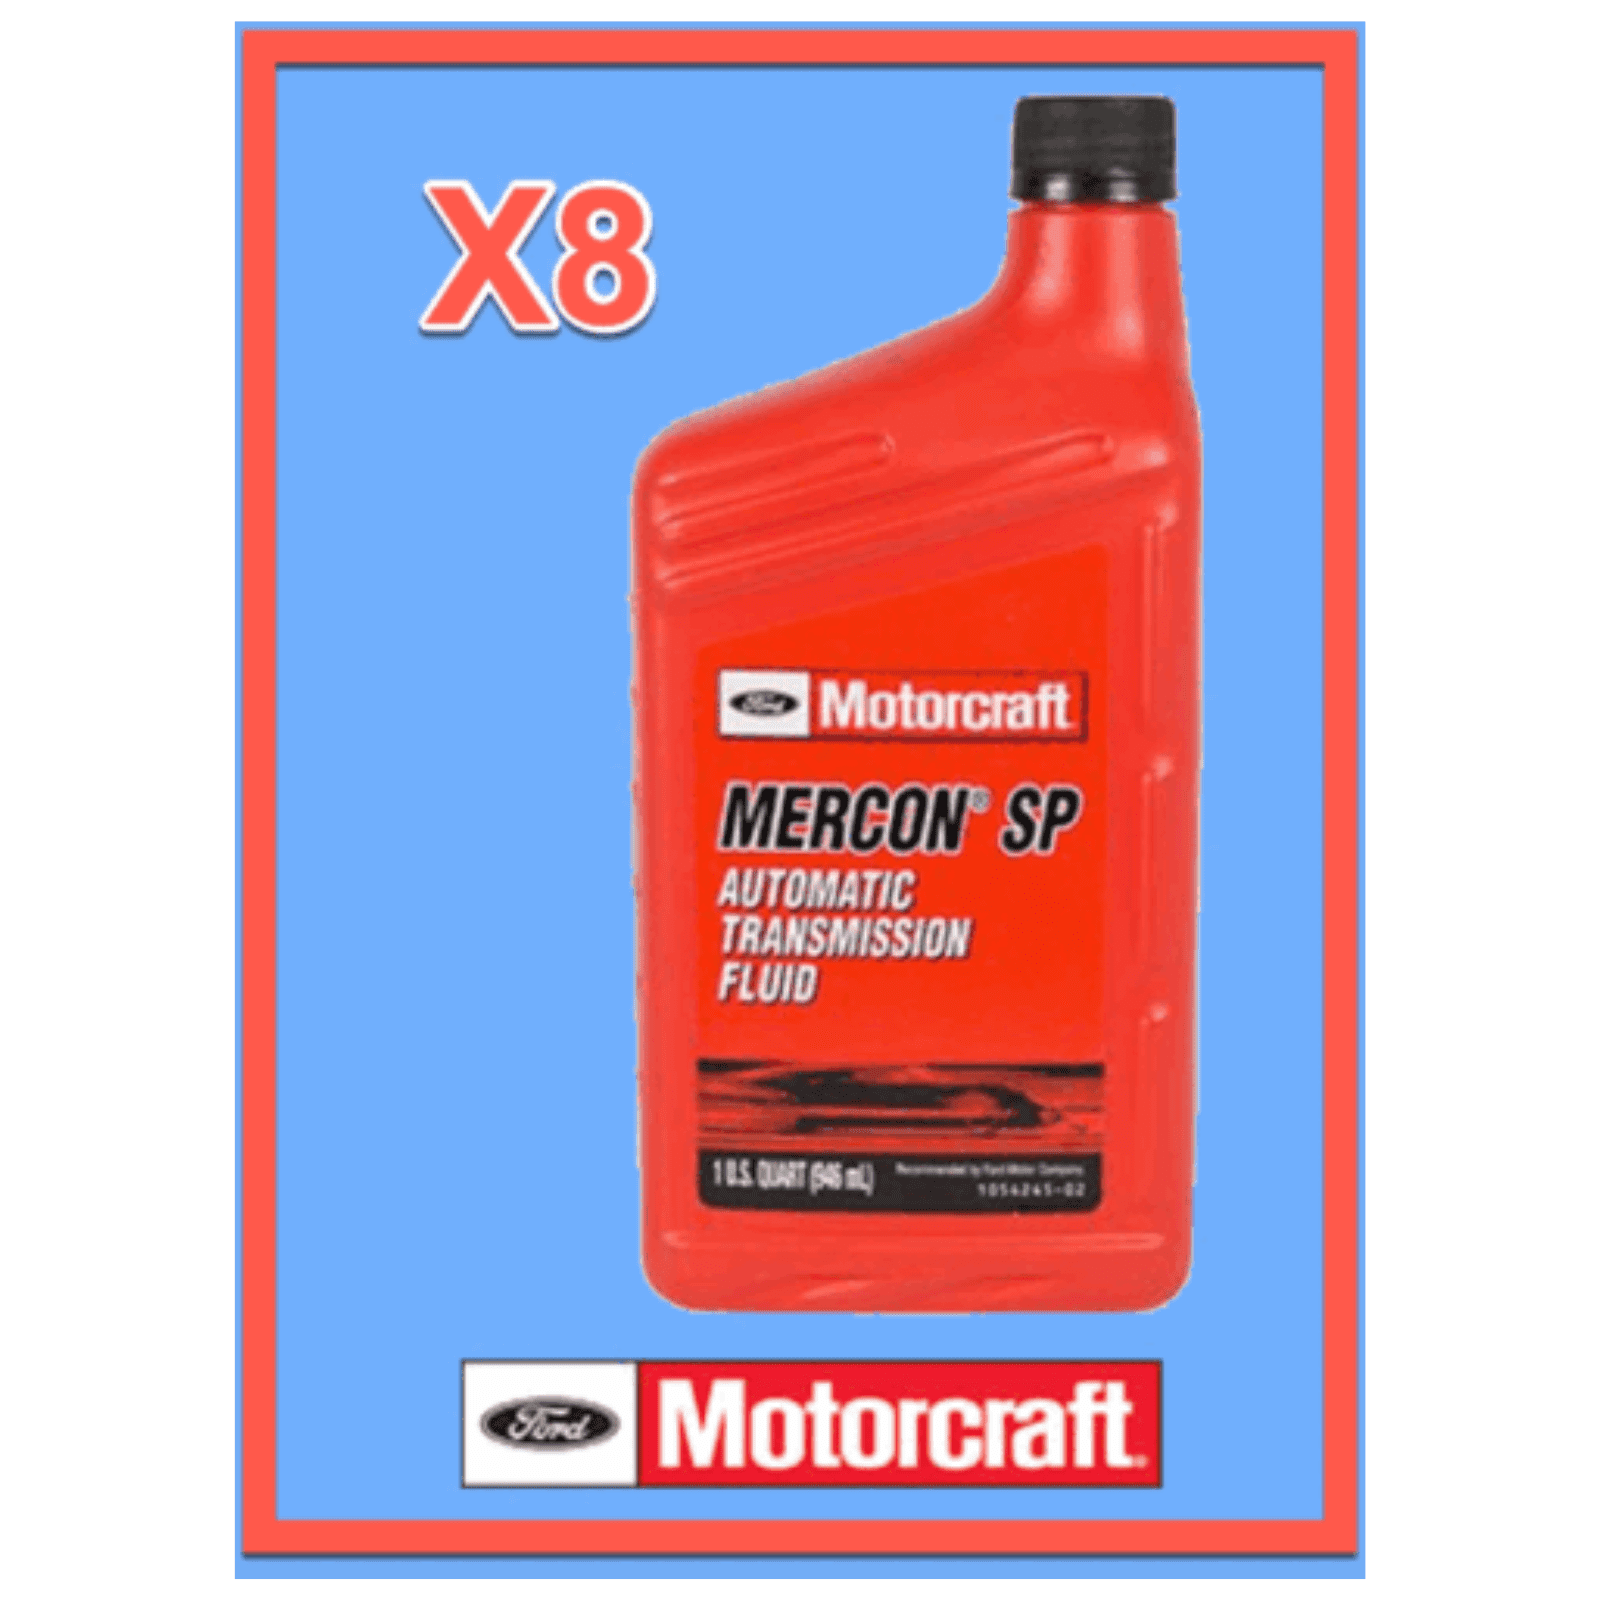  Motorcraft Mercon SP XT-6-QSP transmission fluid case